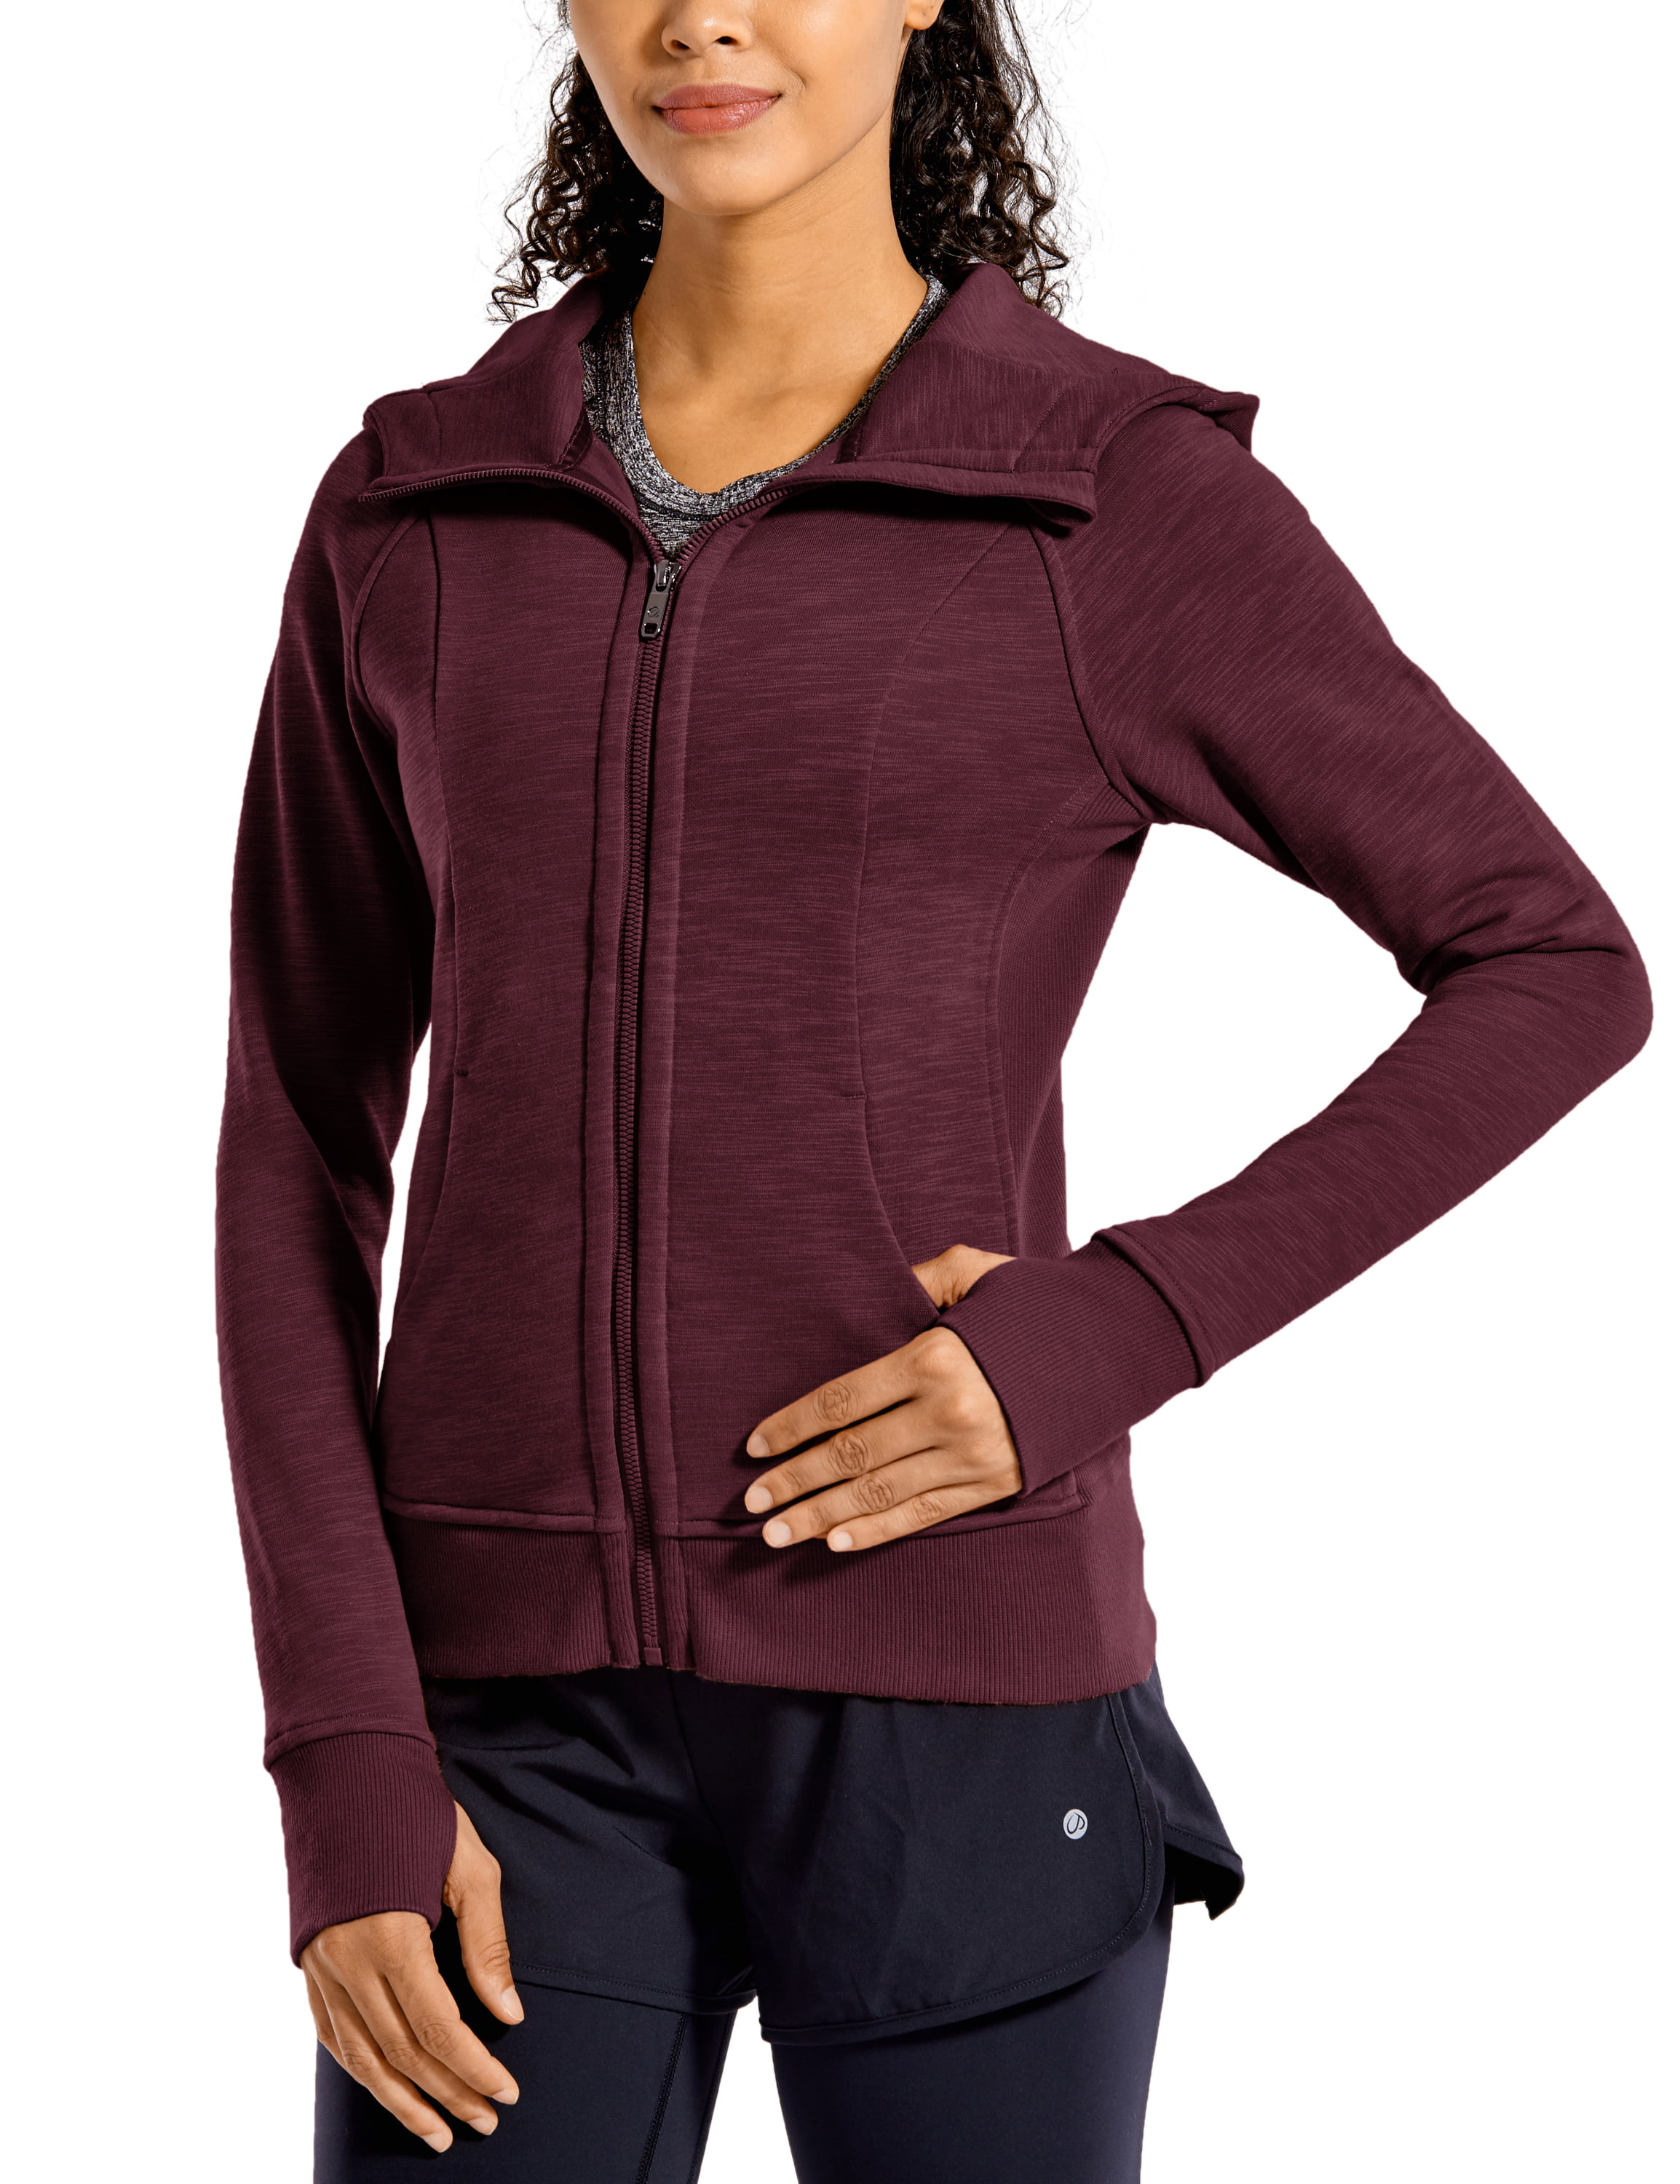 CRZ YOGA Women's Cotton Hoodies Sport Workout Full Zip Hooded Jackets Sweatshirt 